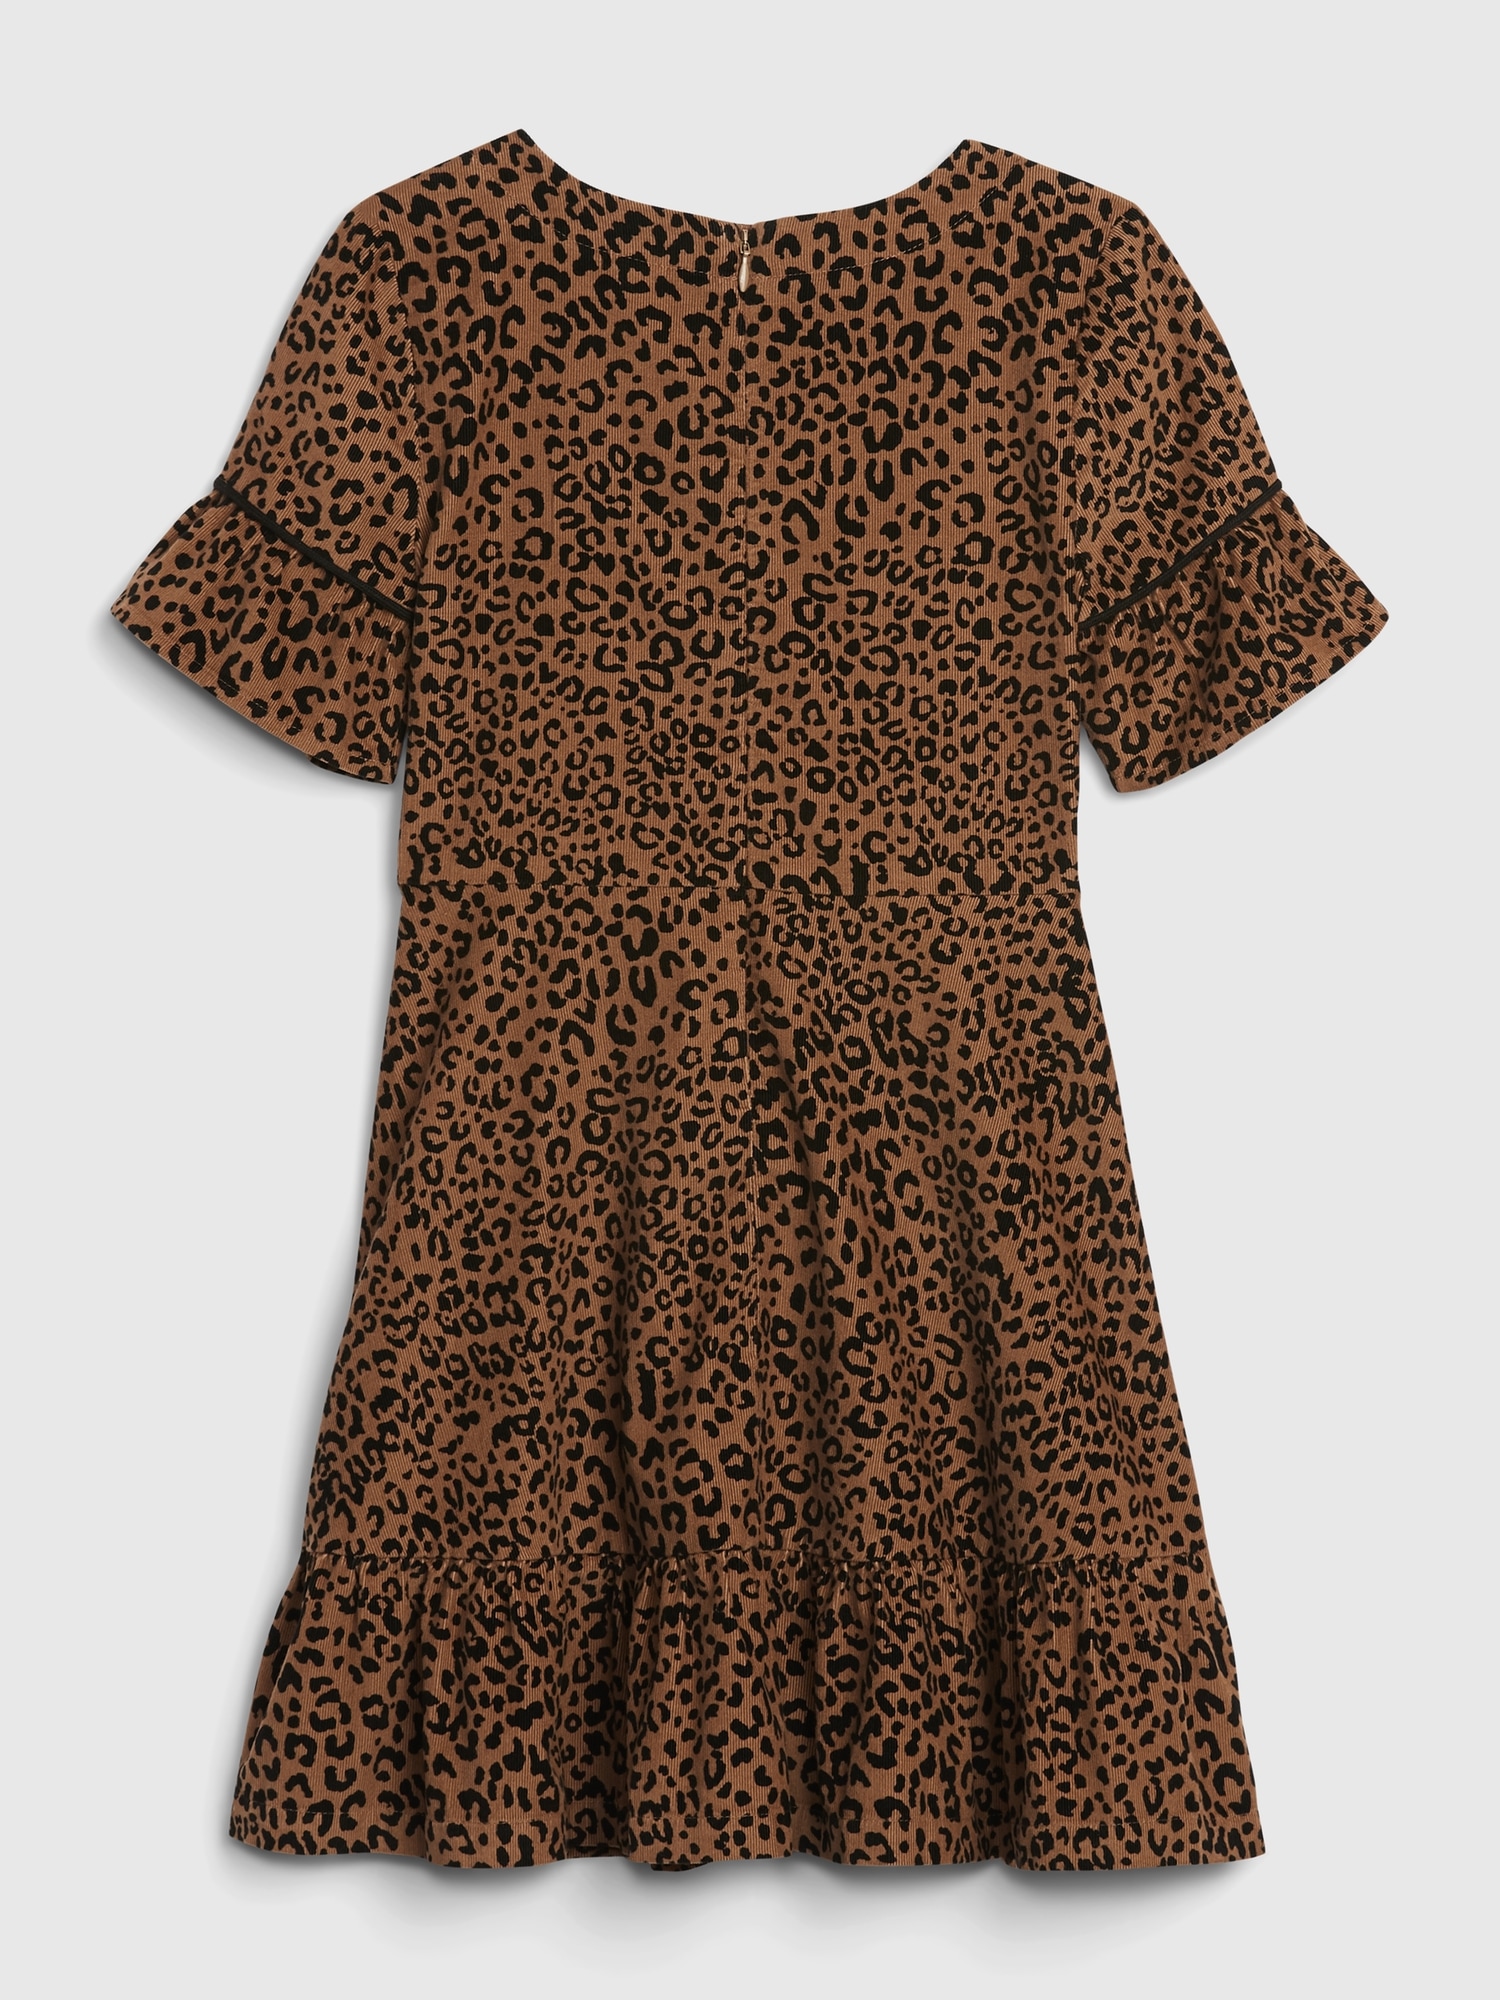 childrens leopard print clothes